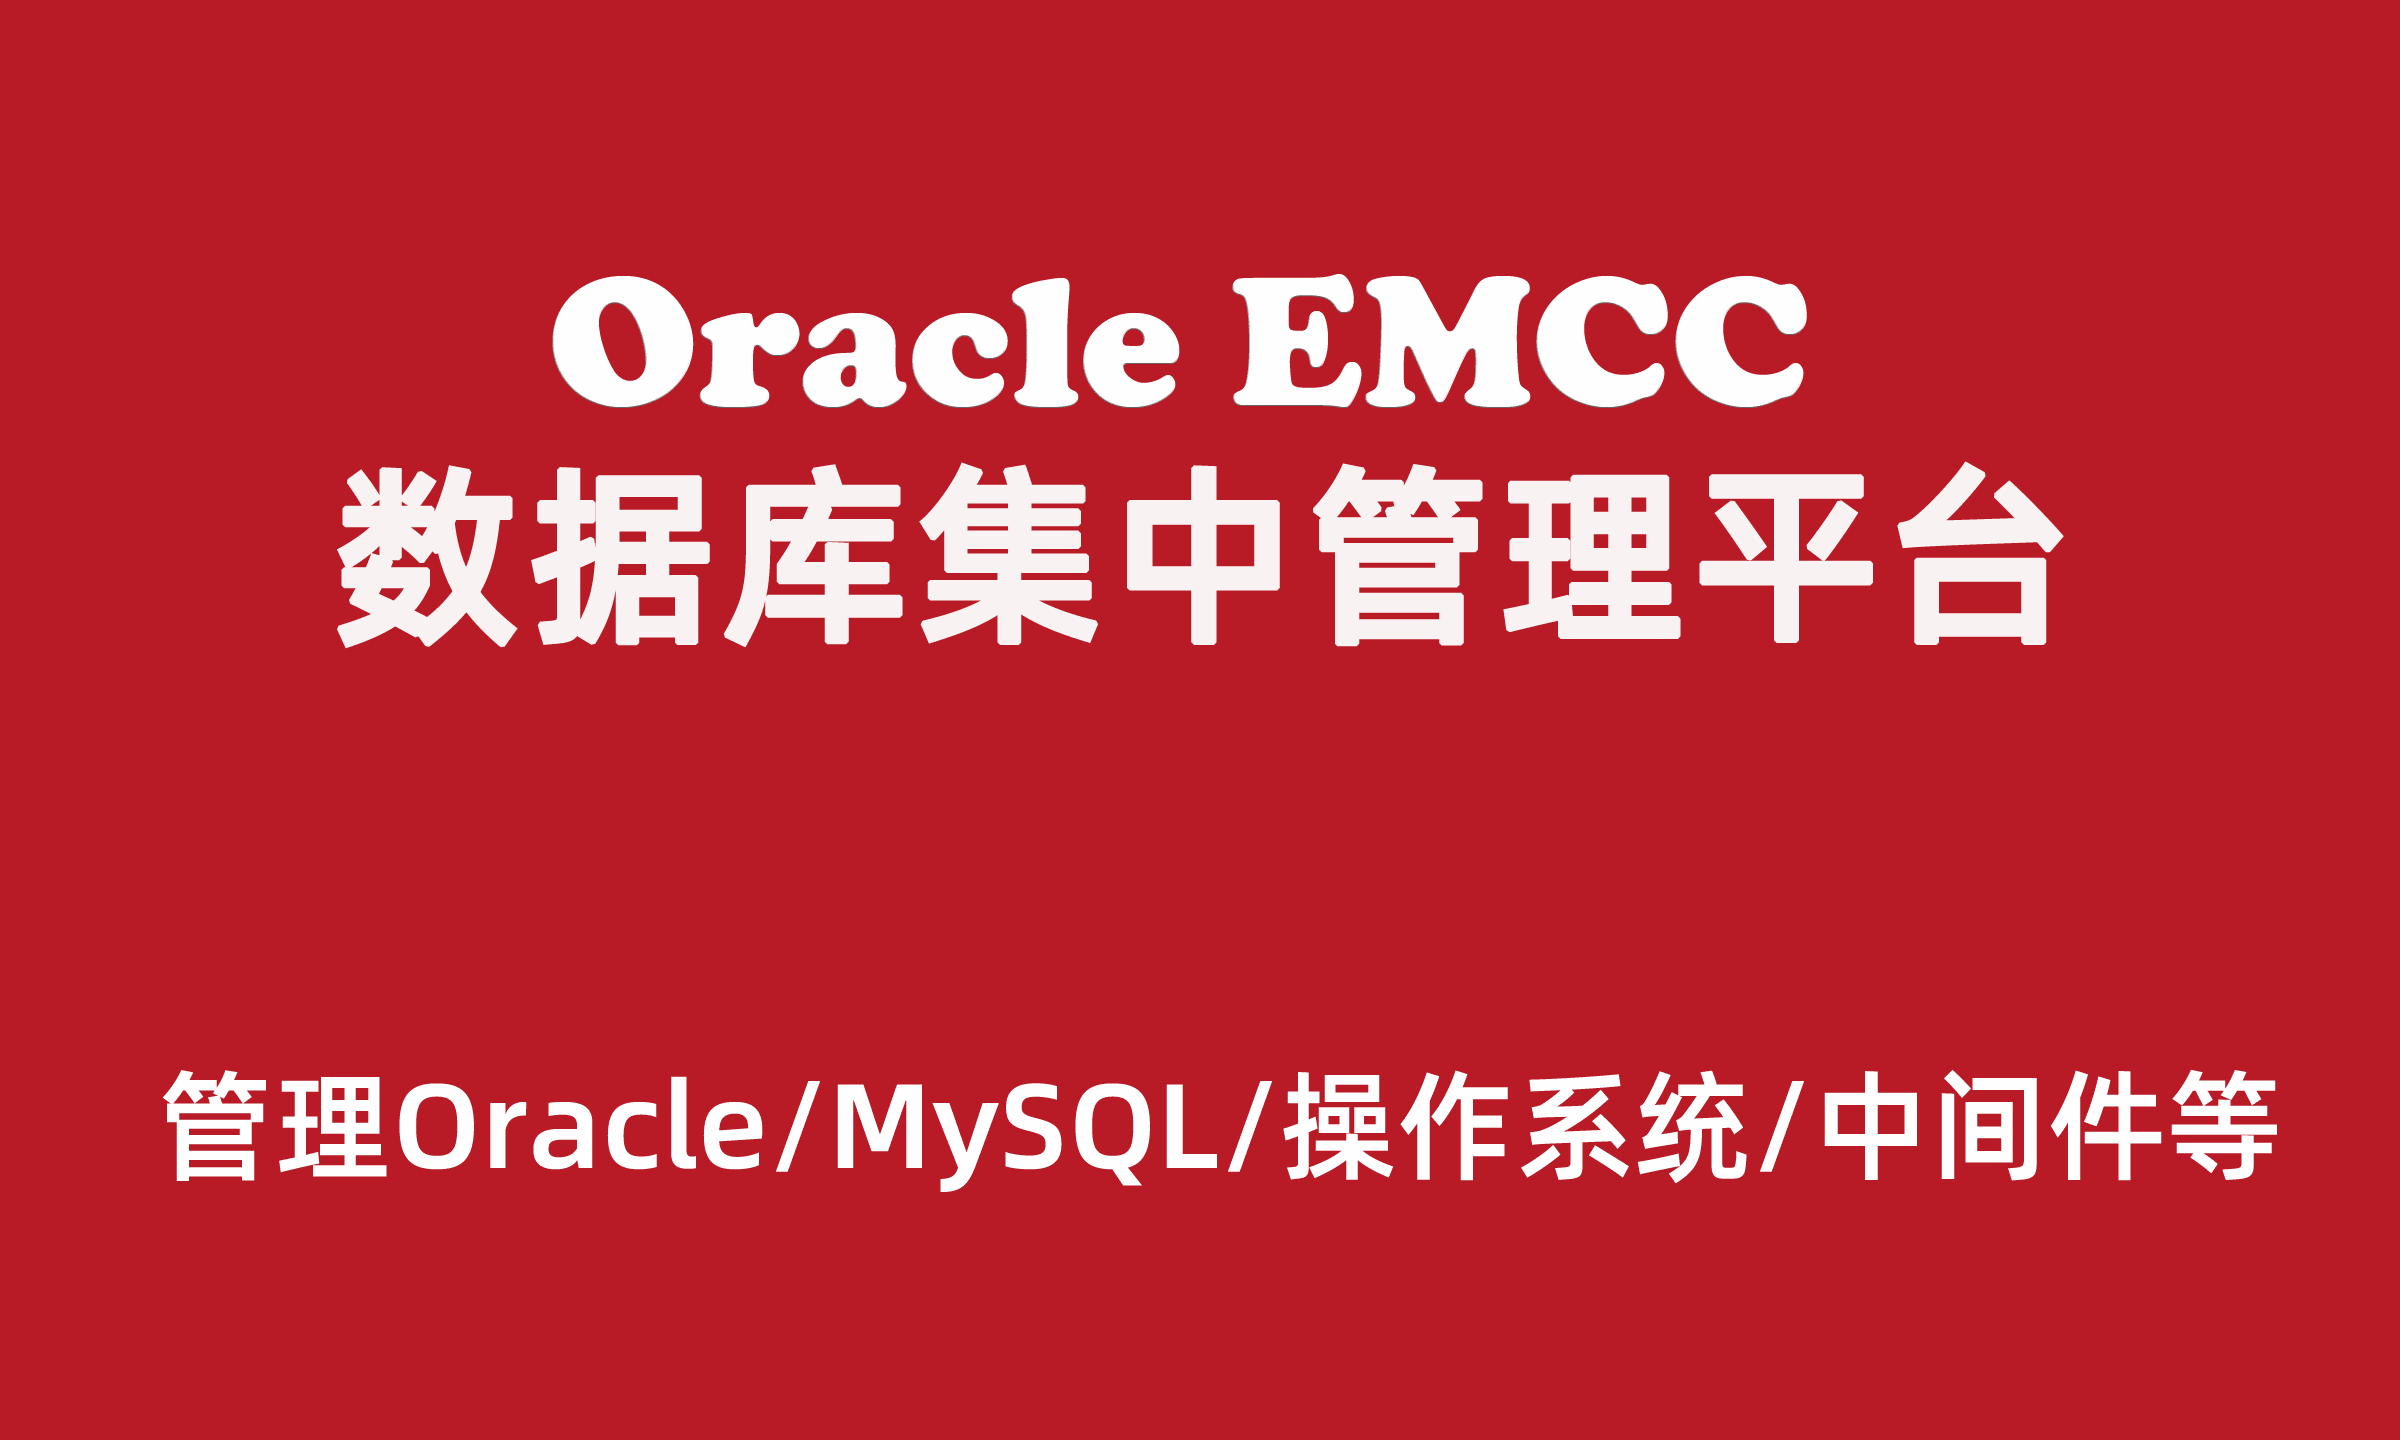 Oracle EMCC数据库集中管理平台